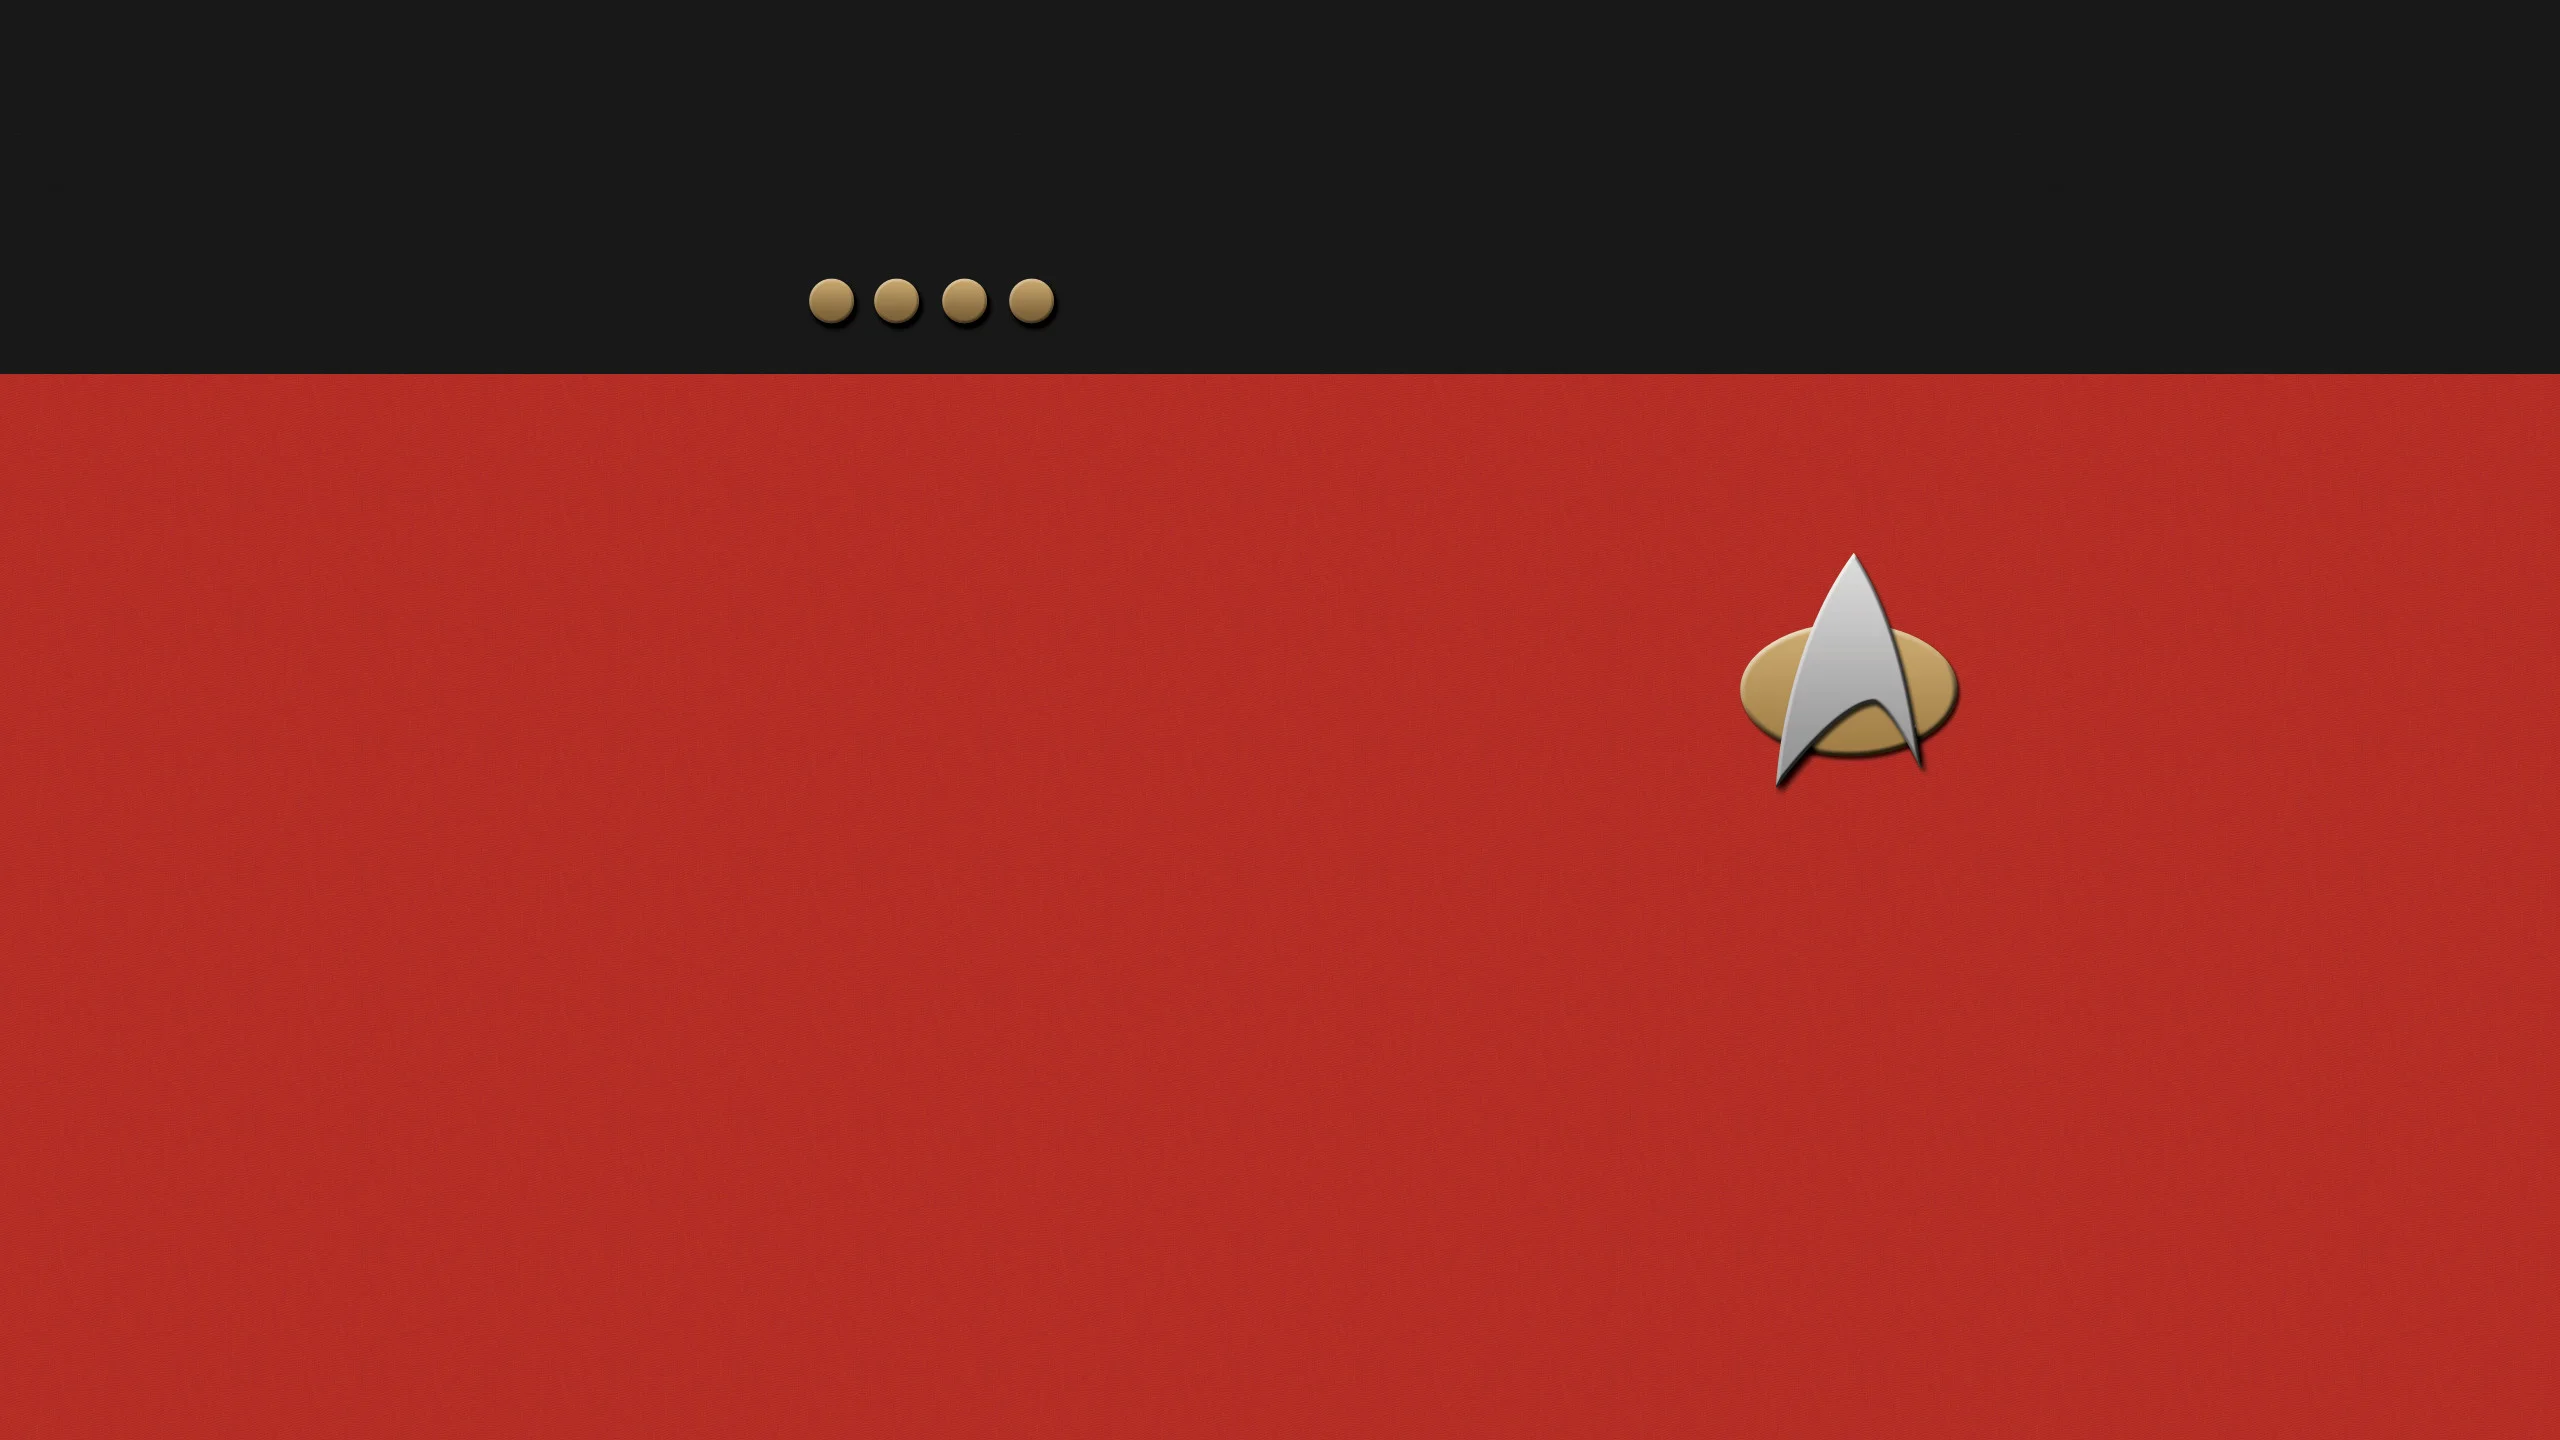 Star Trek TOS Communicator 2 by SynTaxMusic on DeviantArt